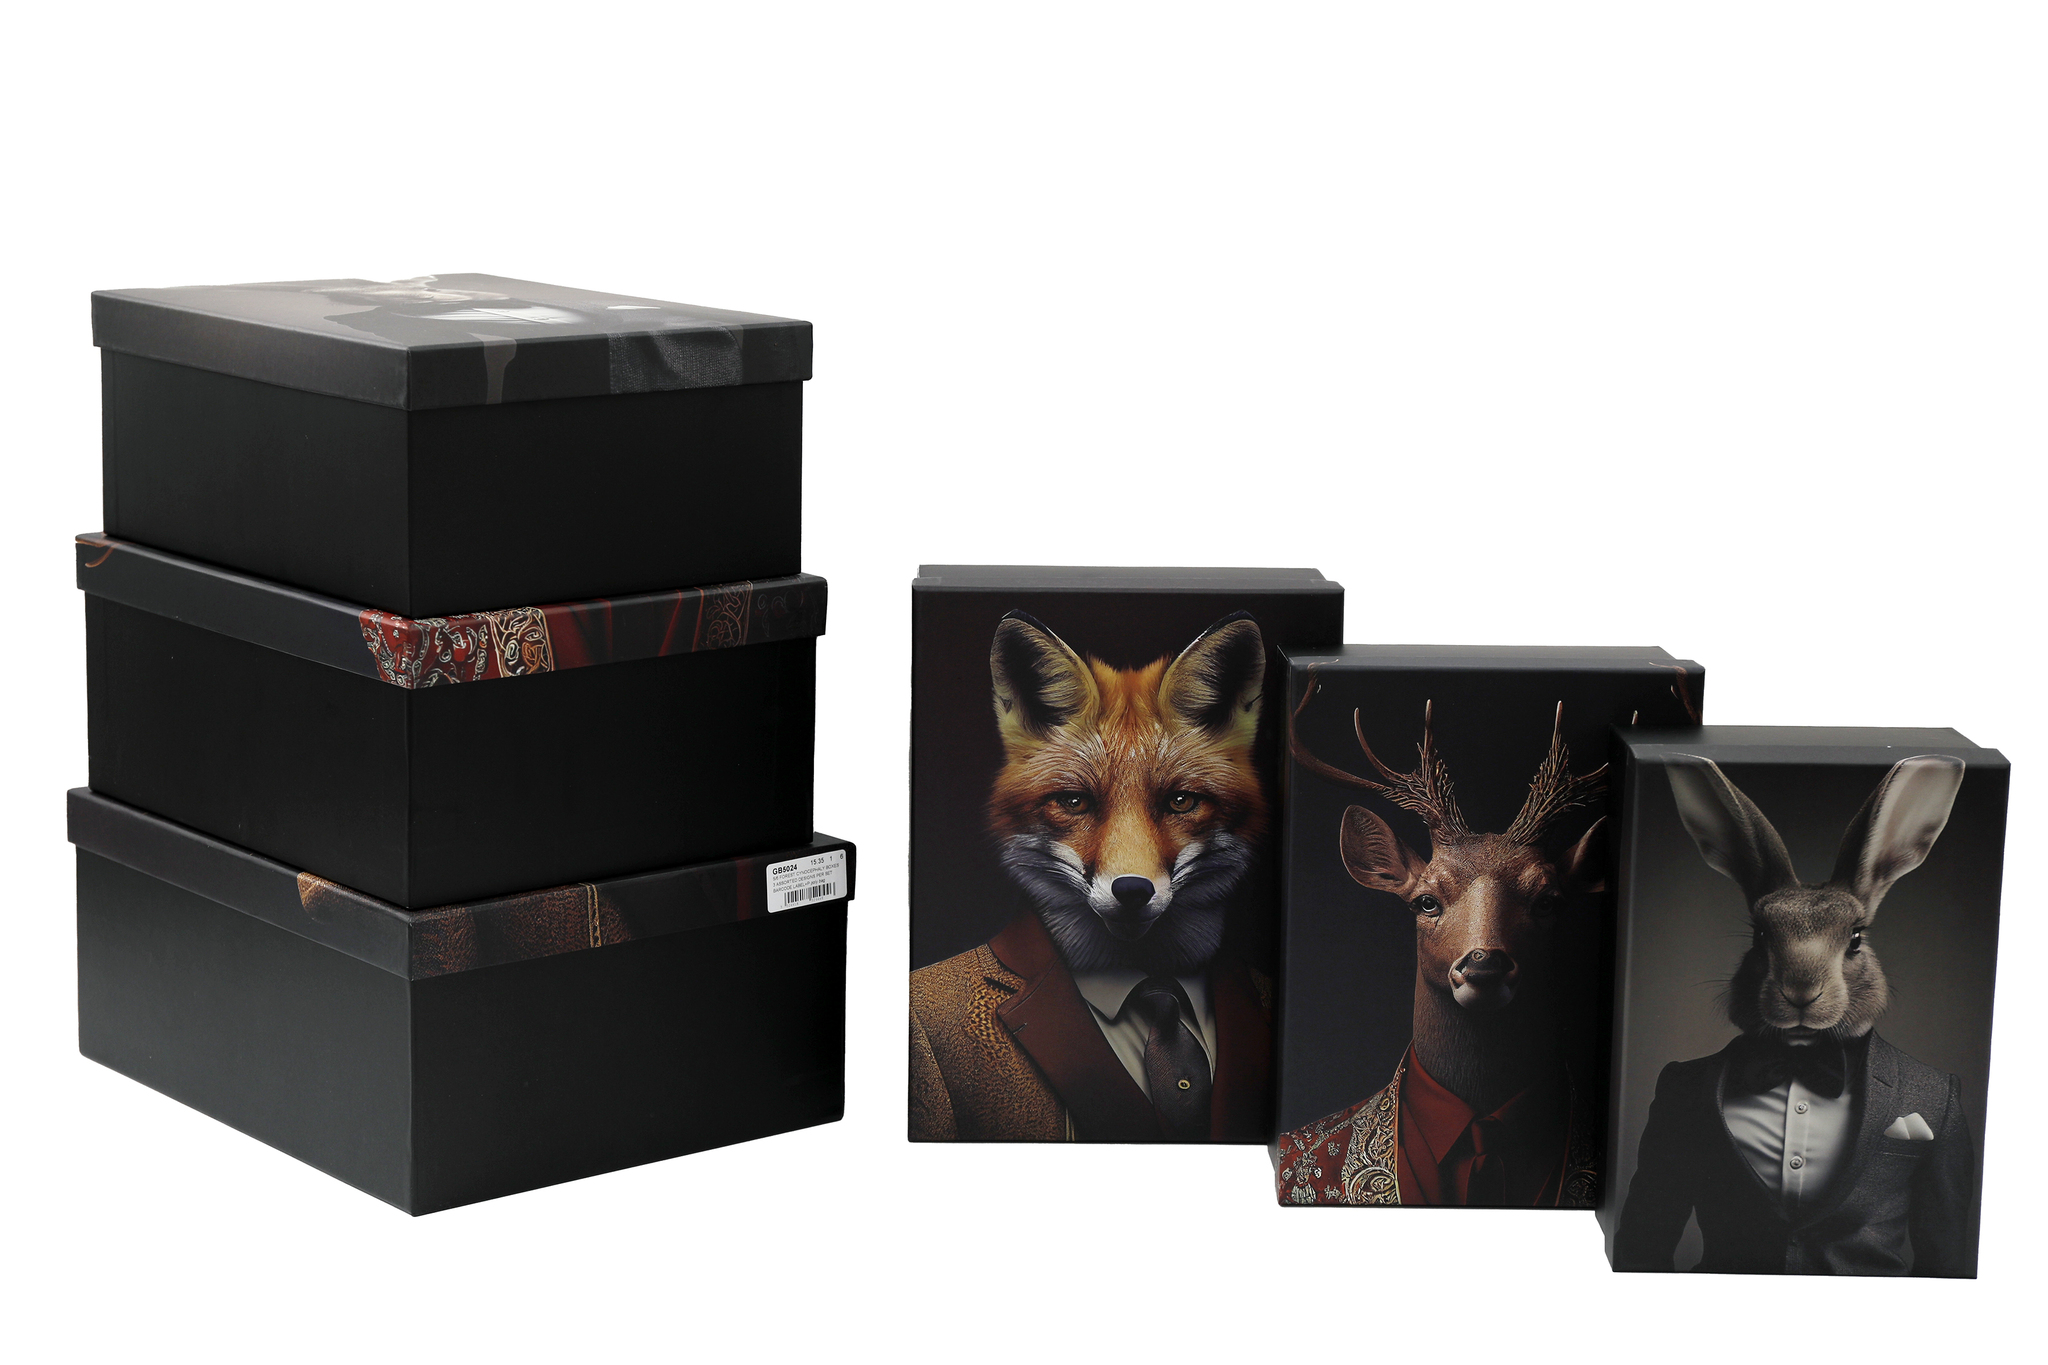 Forest Animal Head Giftbox